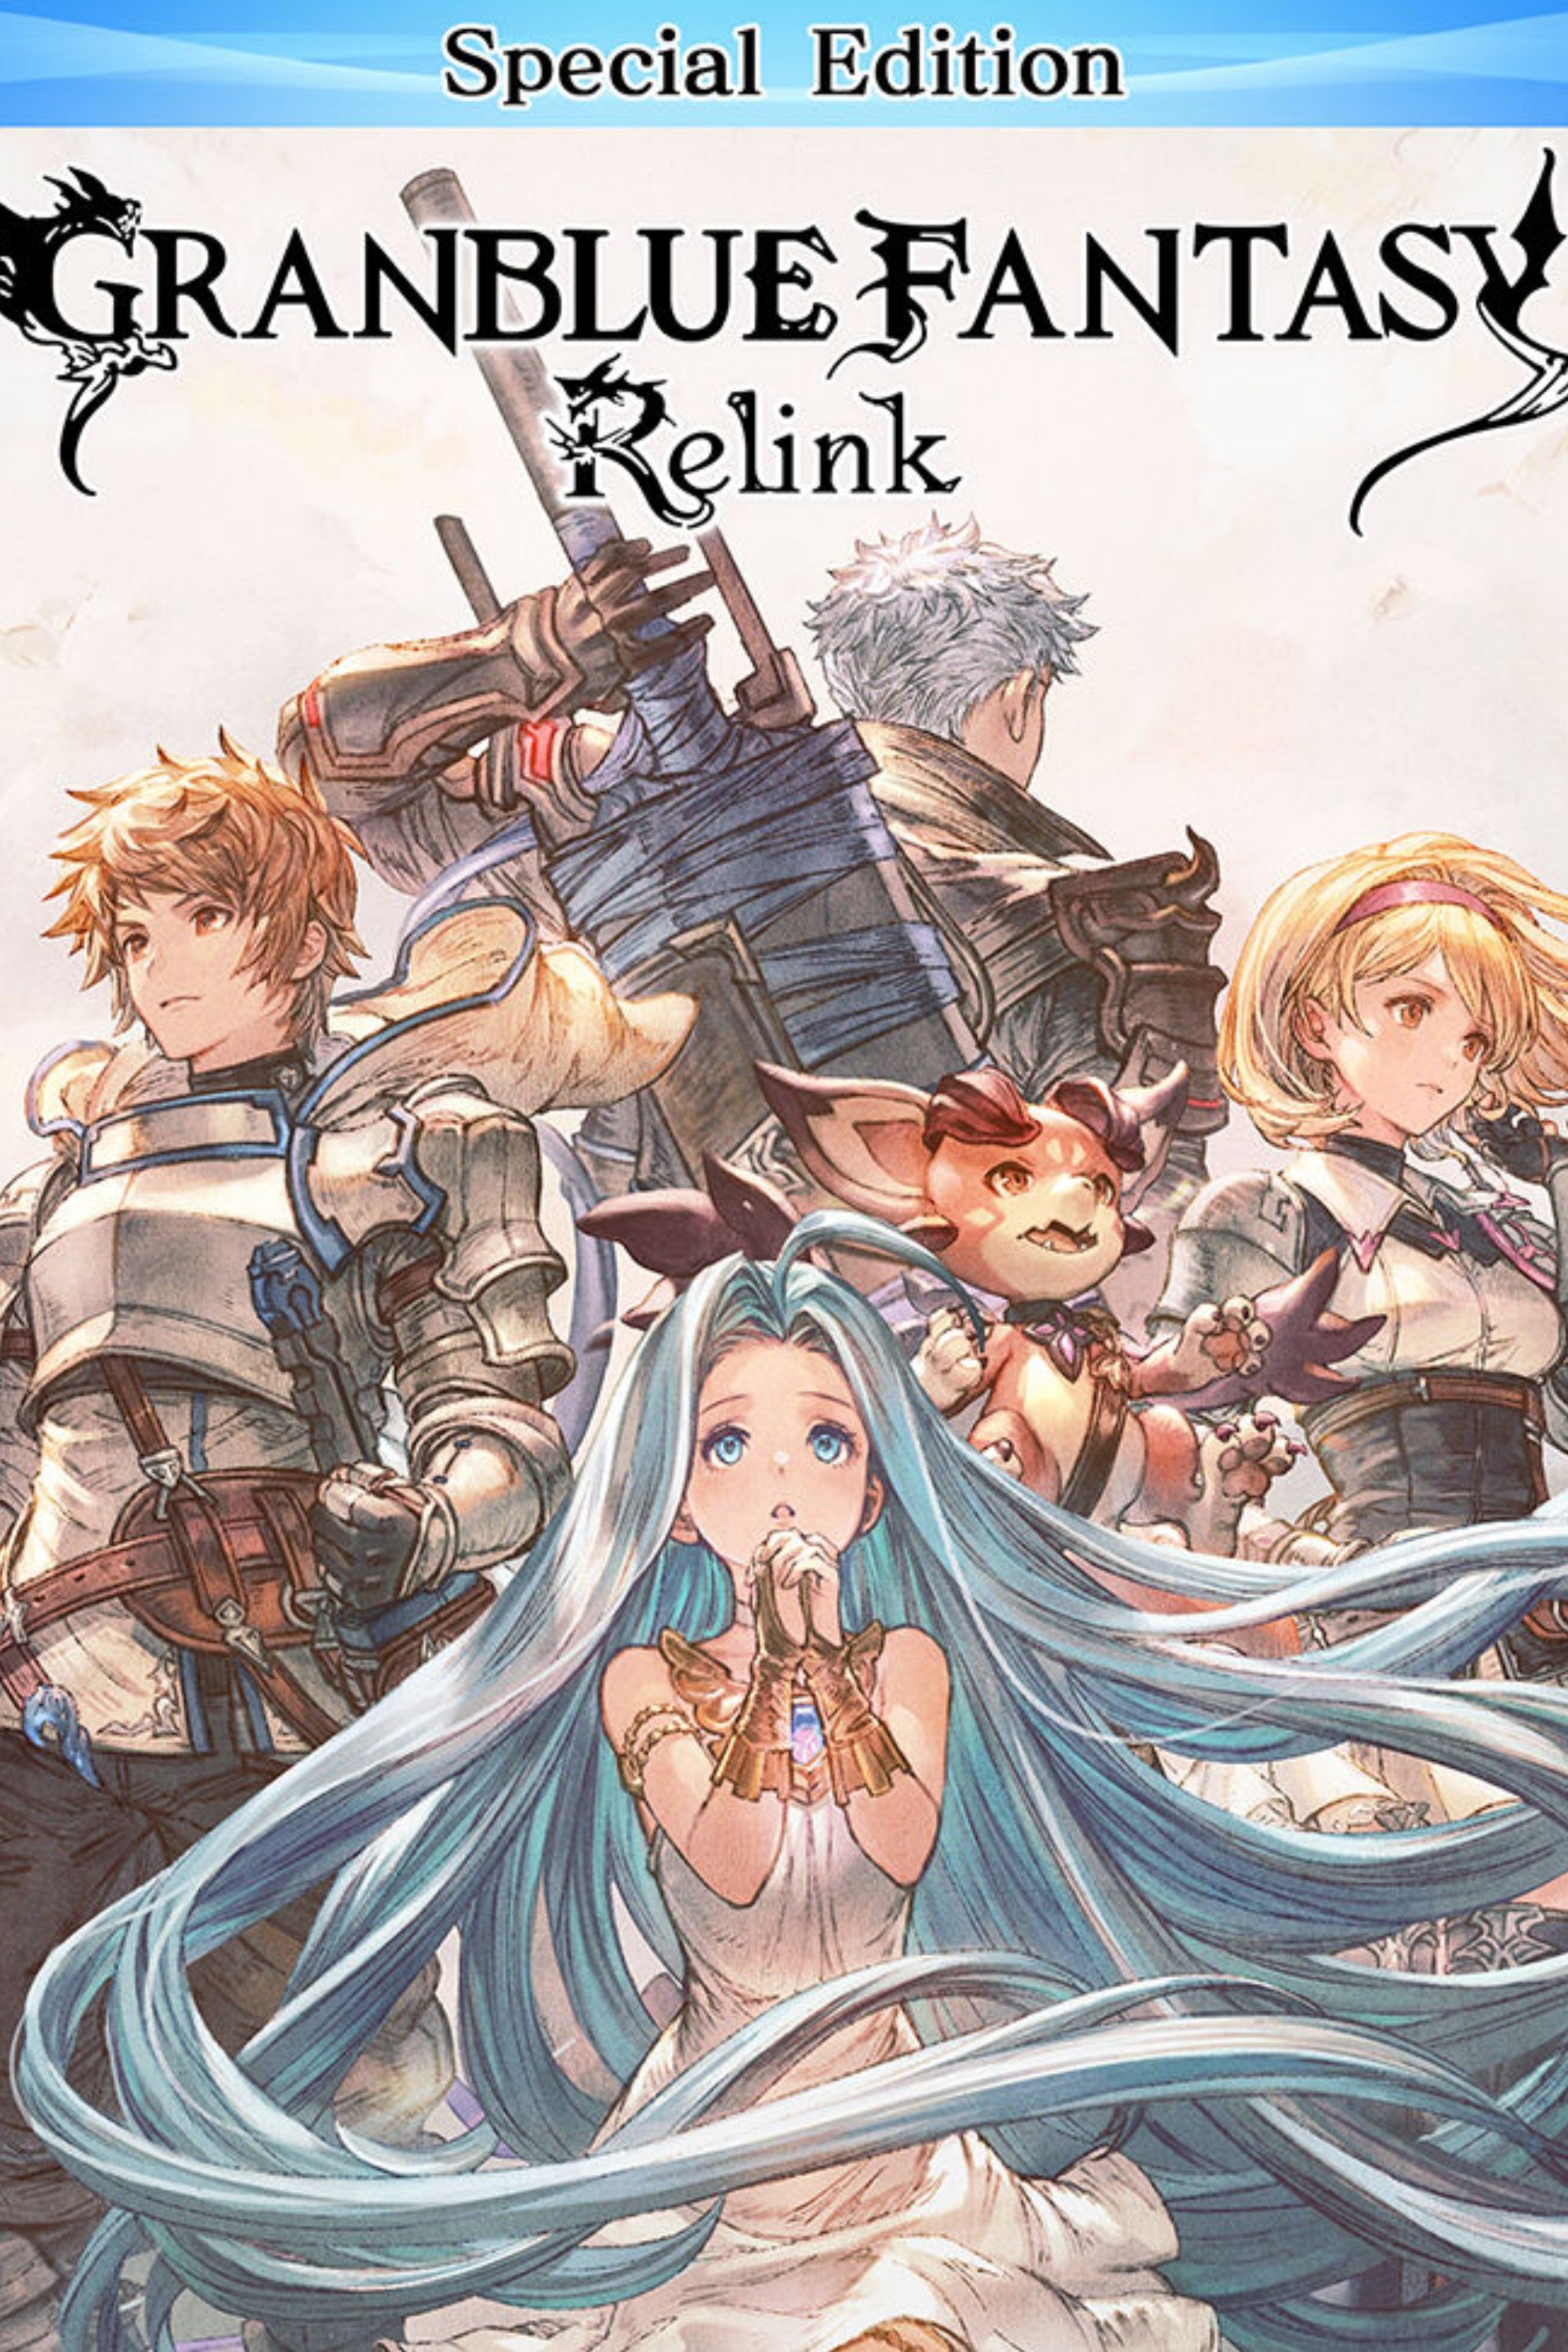 GRANBLUE FANTASY: Relink Release Date Finally Set! Pre-Orders Start!